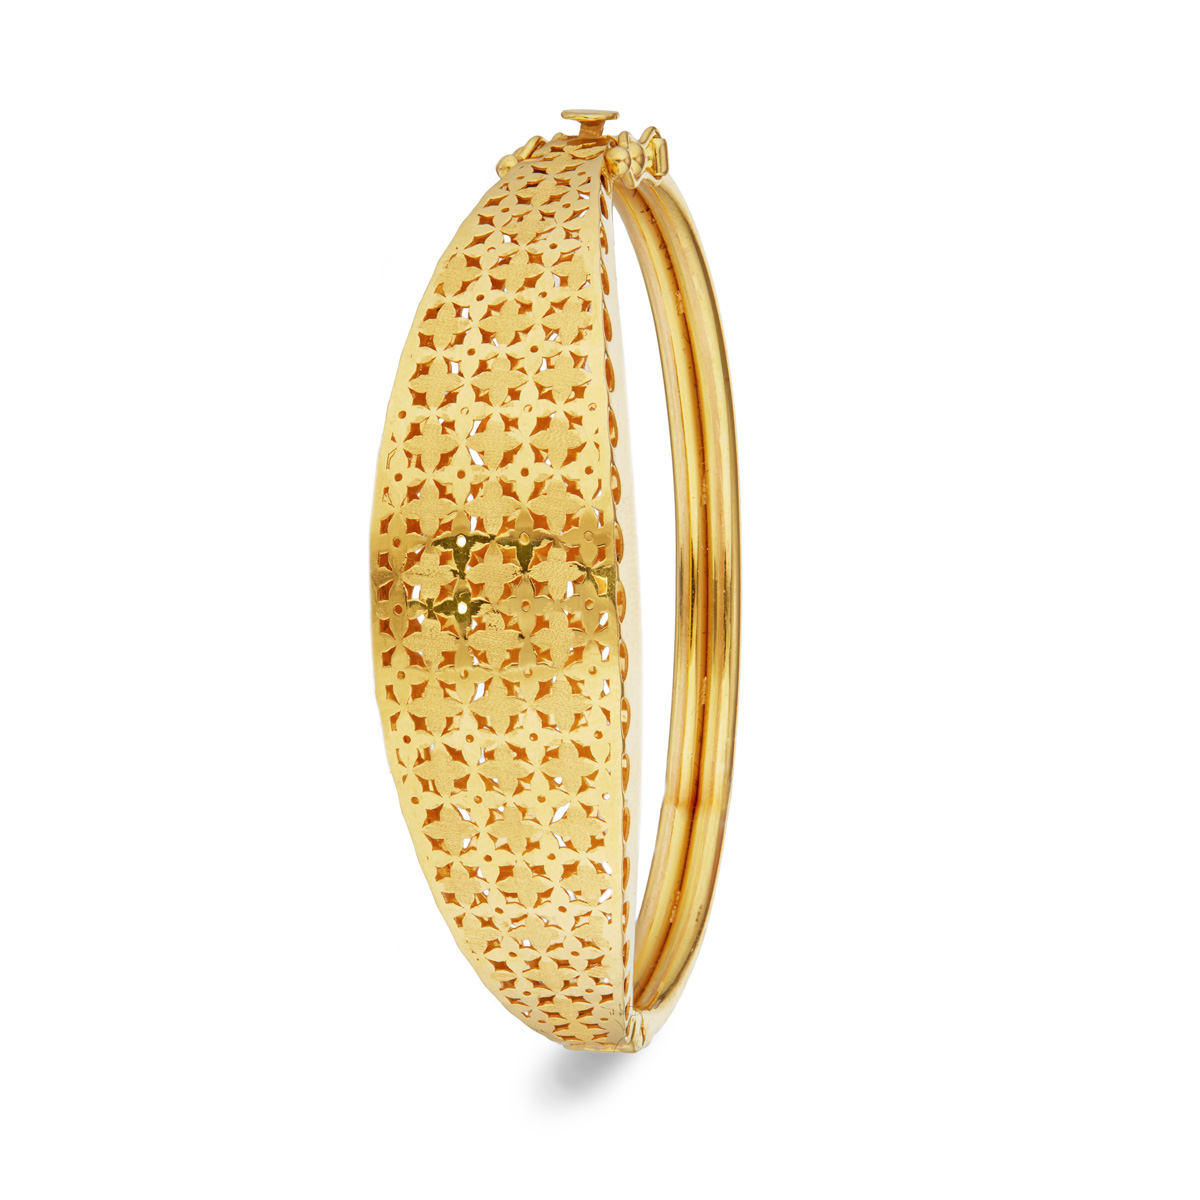 The Indira Gold Bracelet